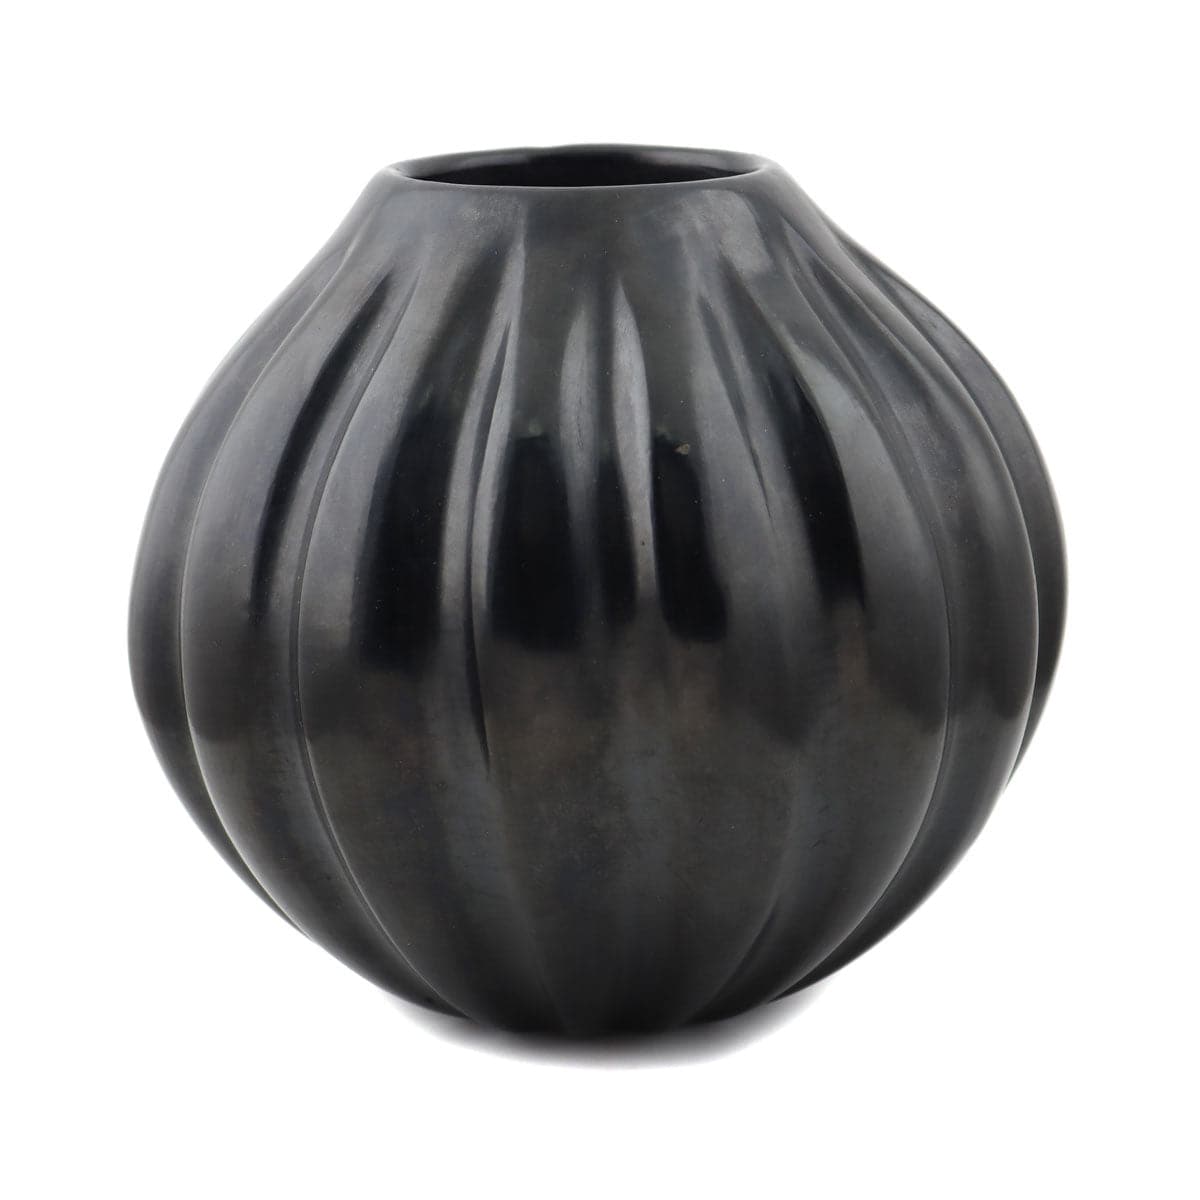 Helen Shupla (1928-1985) - Santa Clara Black Melon Jar c. 1970-80s, 6.75" x 6.5" (P91963-1221-003)1